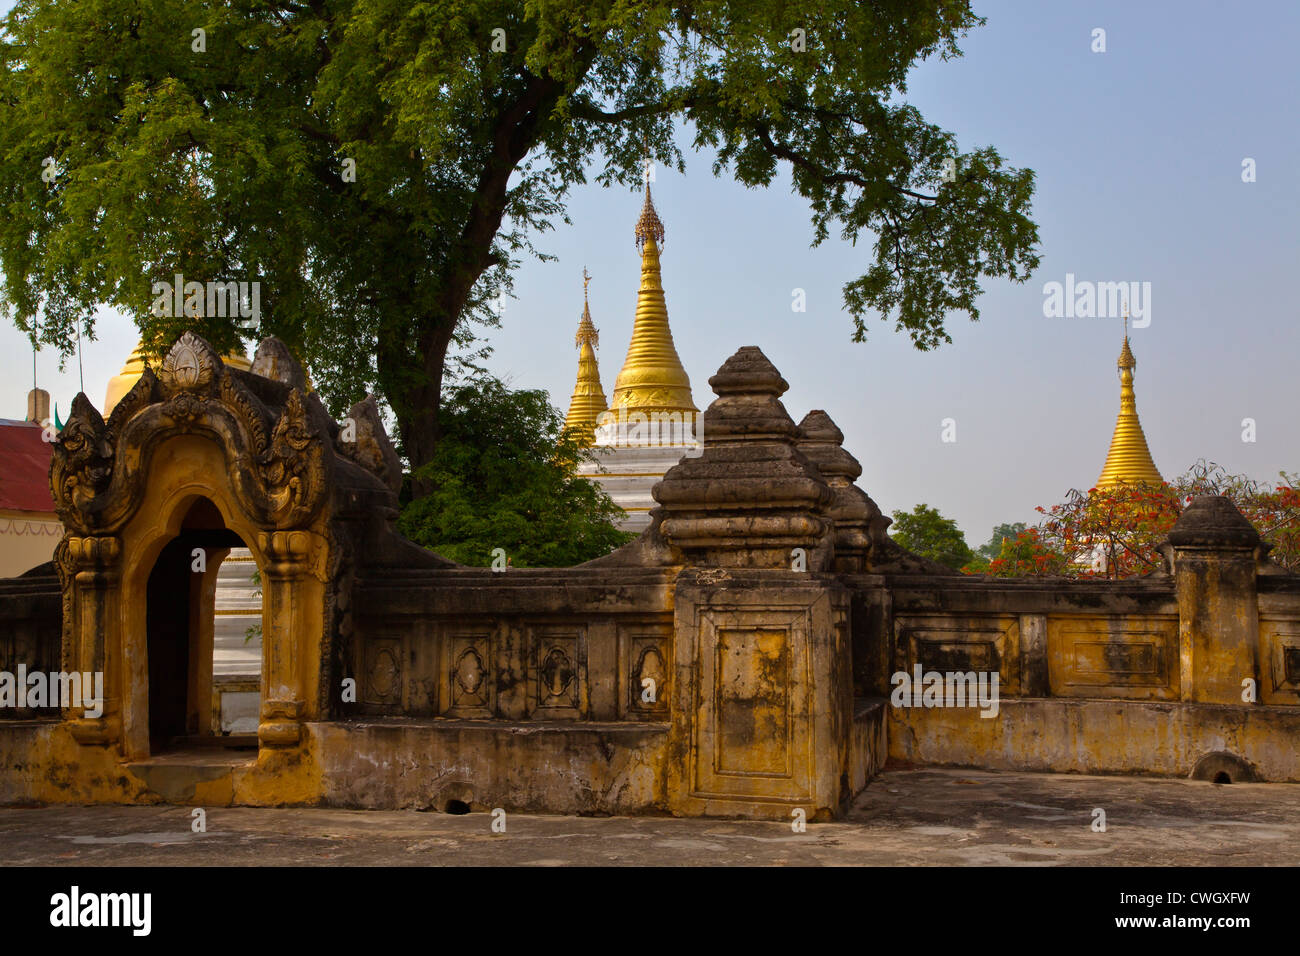 HTILAINGSHIN PAYAin historic INWA dates to the BAGAN period - MYANMAR Stock Photo